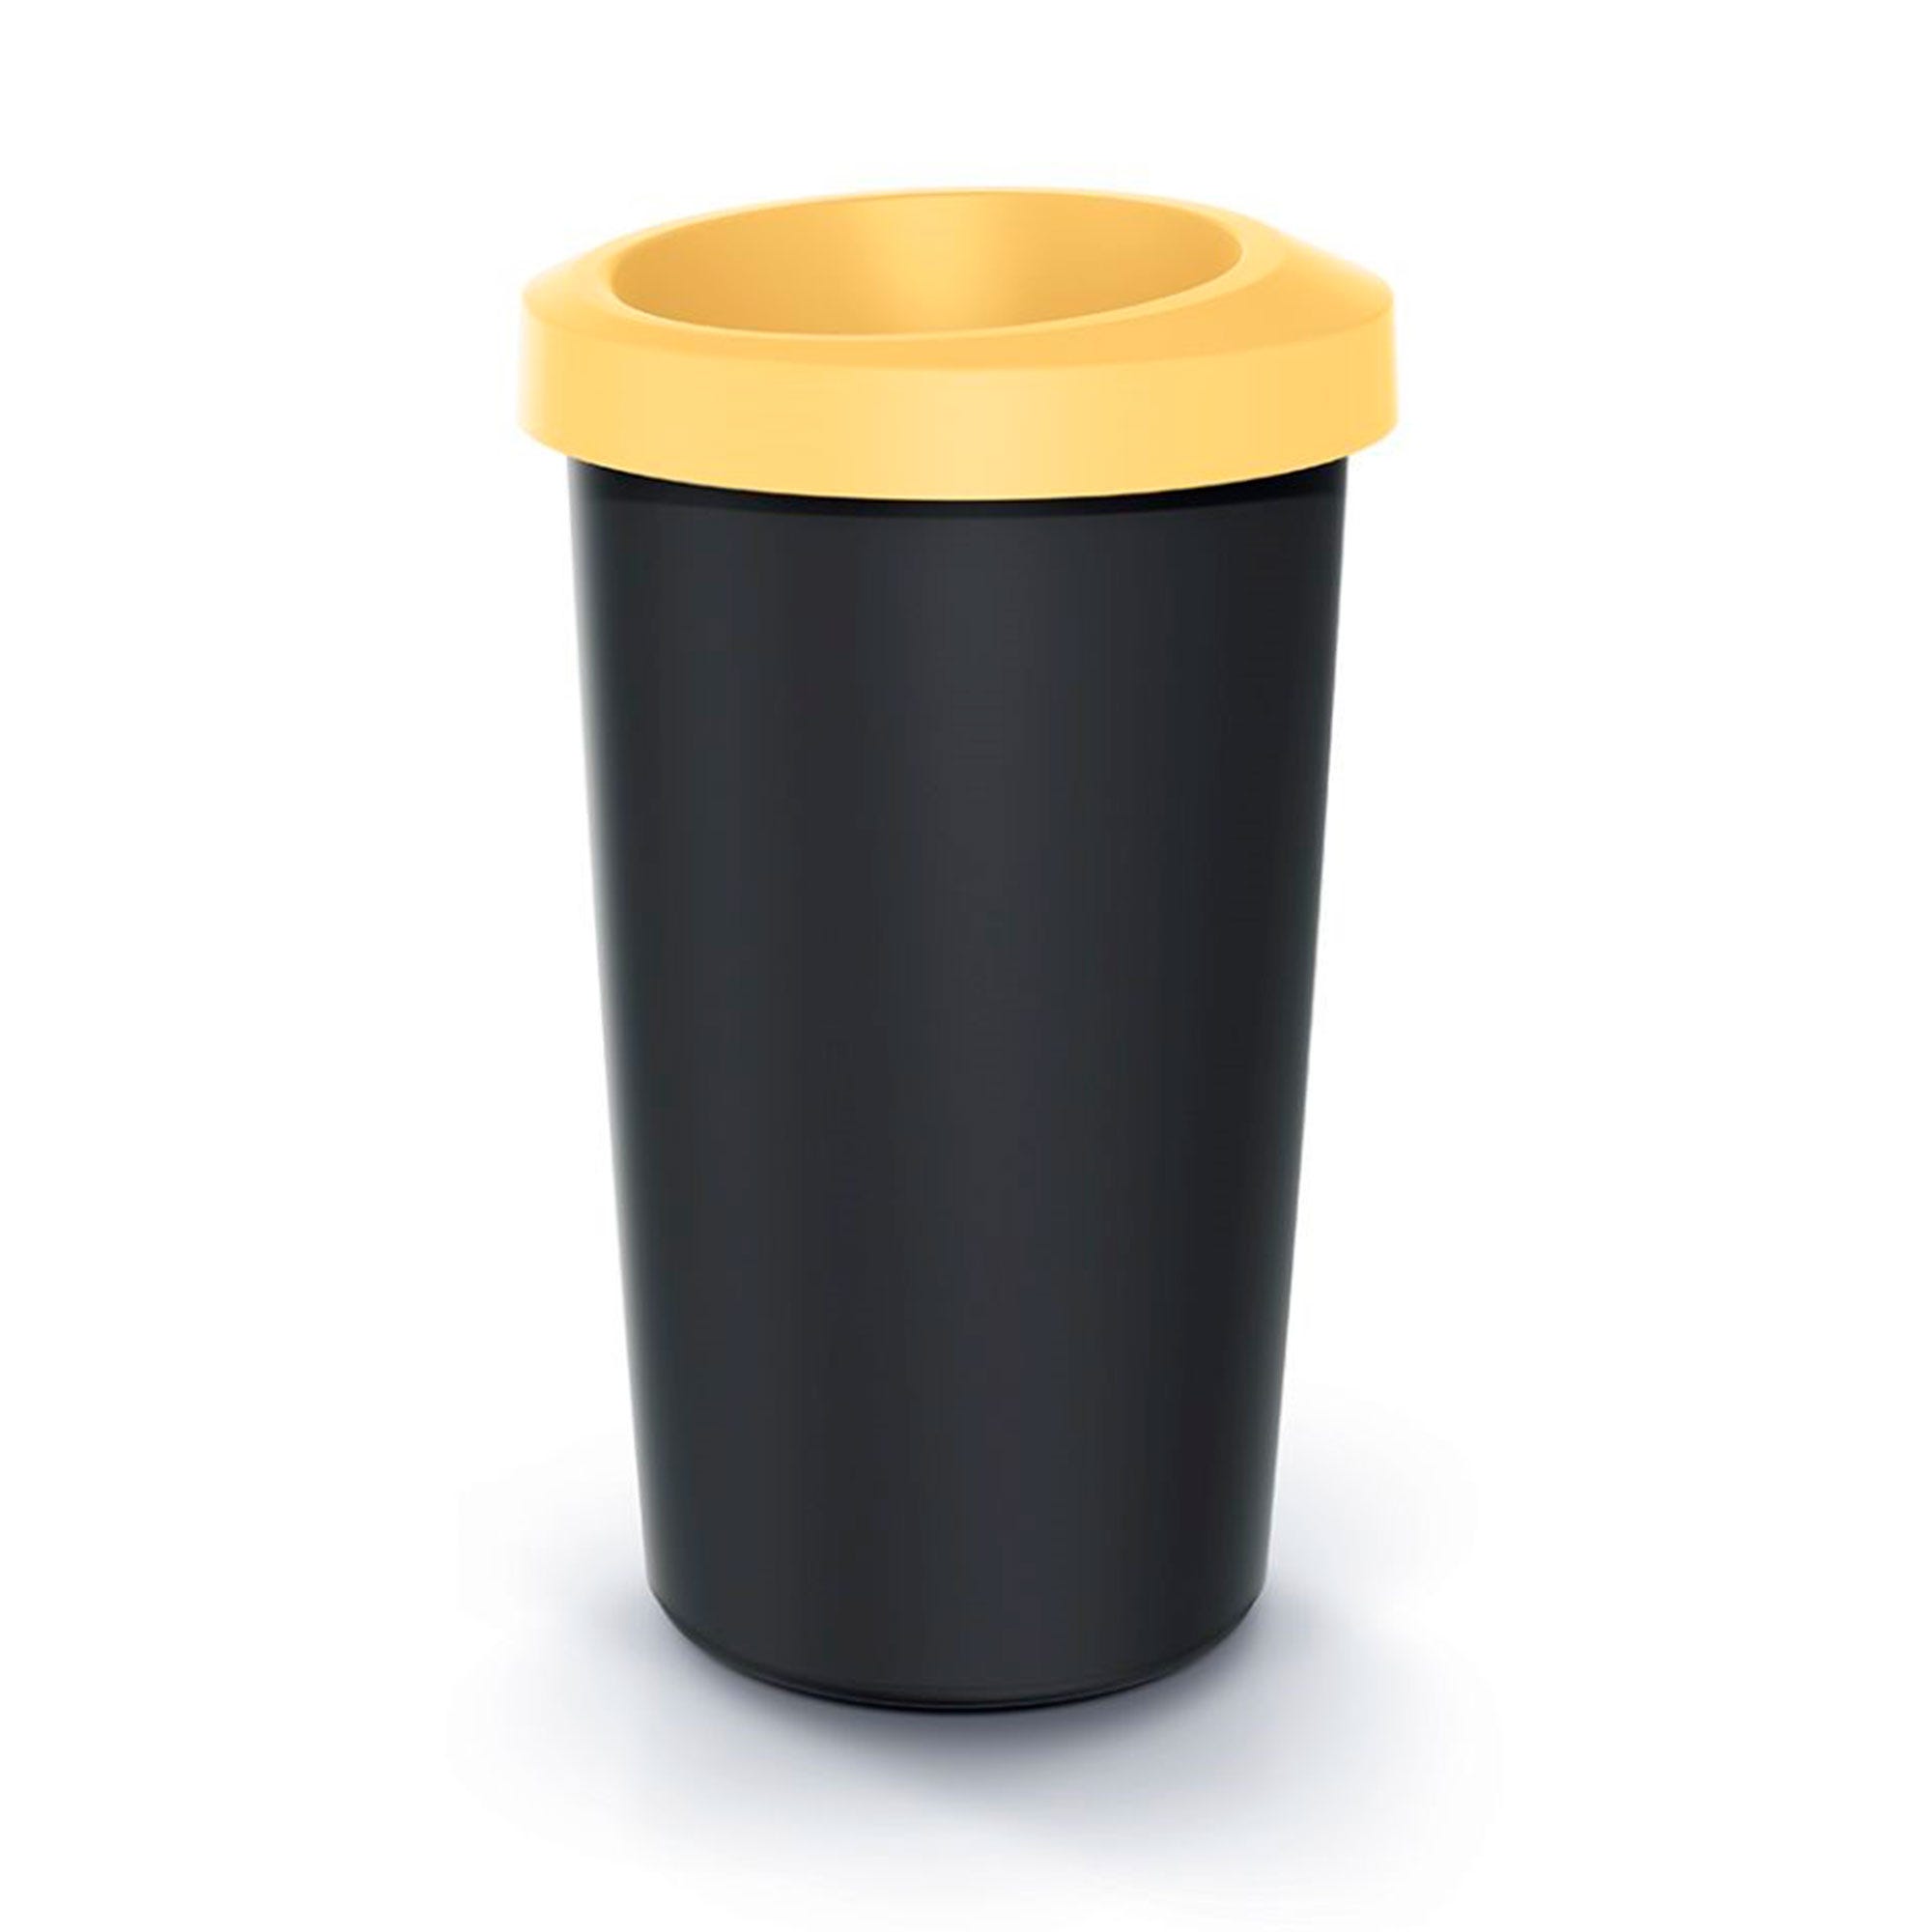 Cubo de basura de reciclaje Papelera de 20 litros Keden